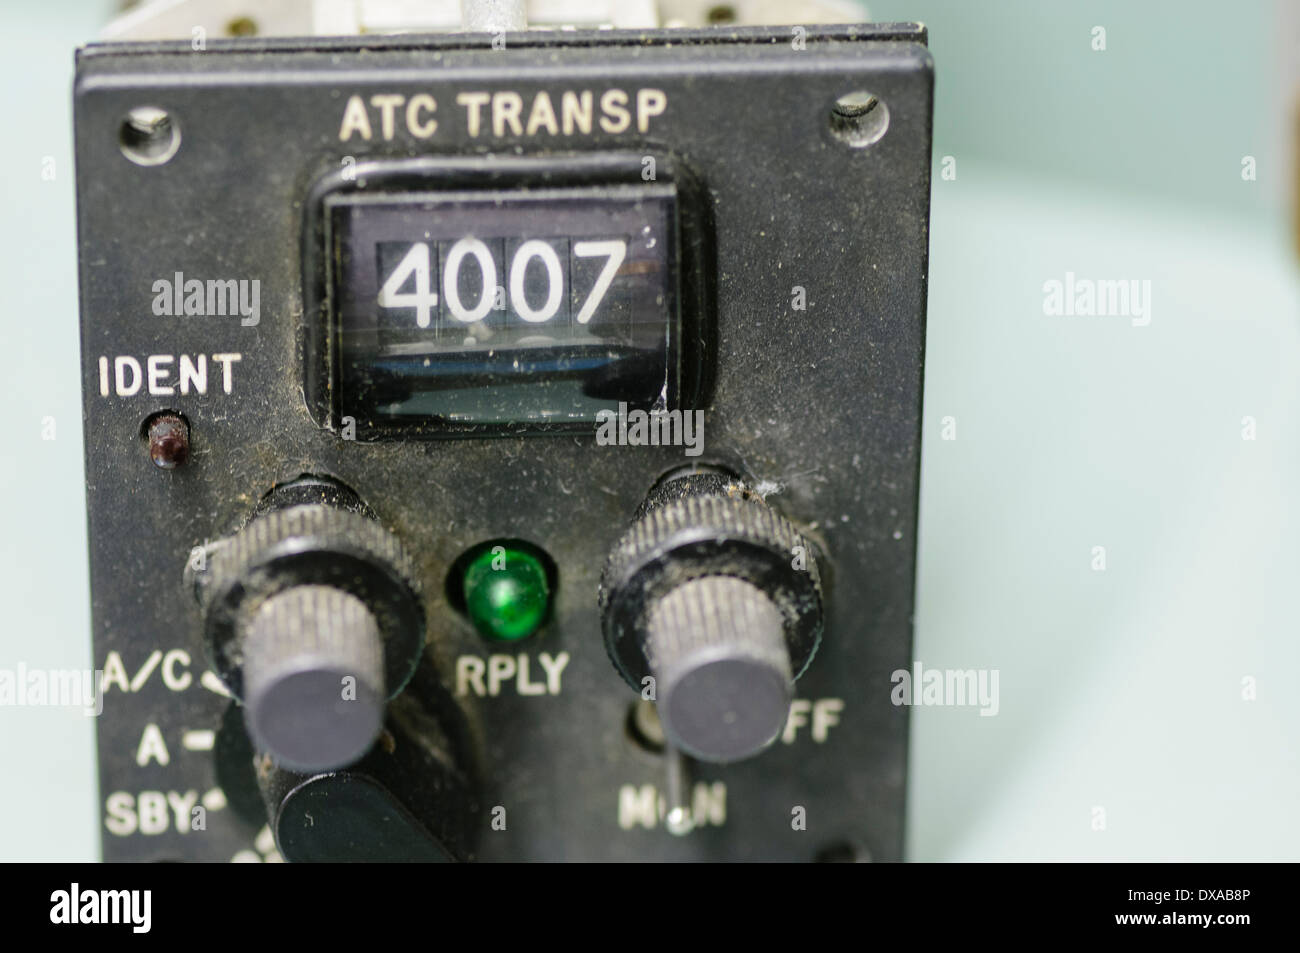 ATC transponder from an aircraft control panel. Stock Photo